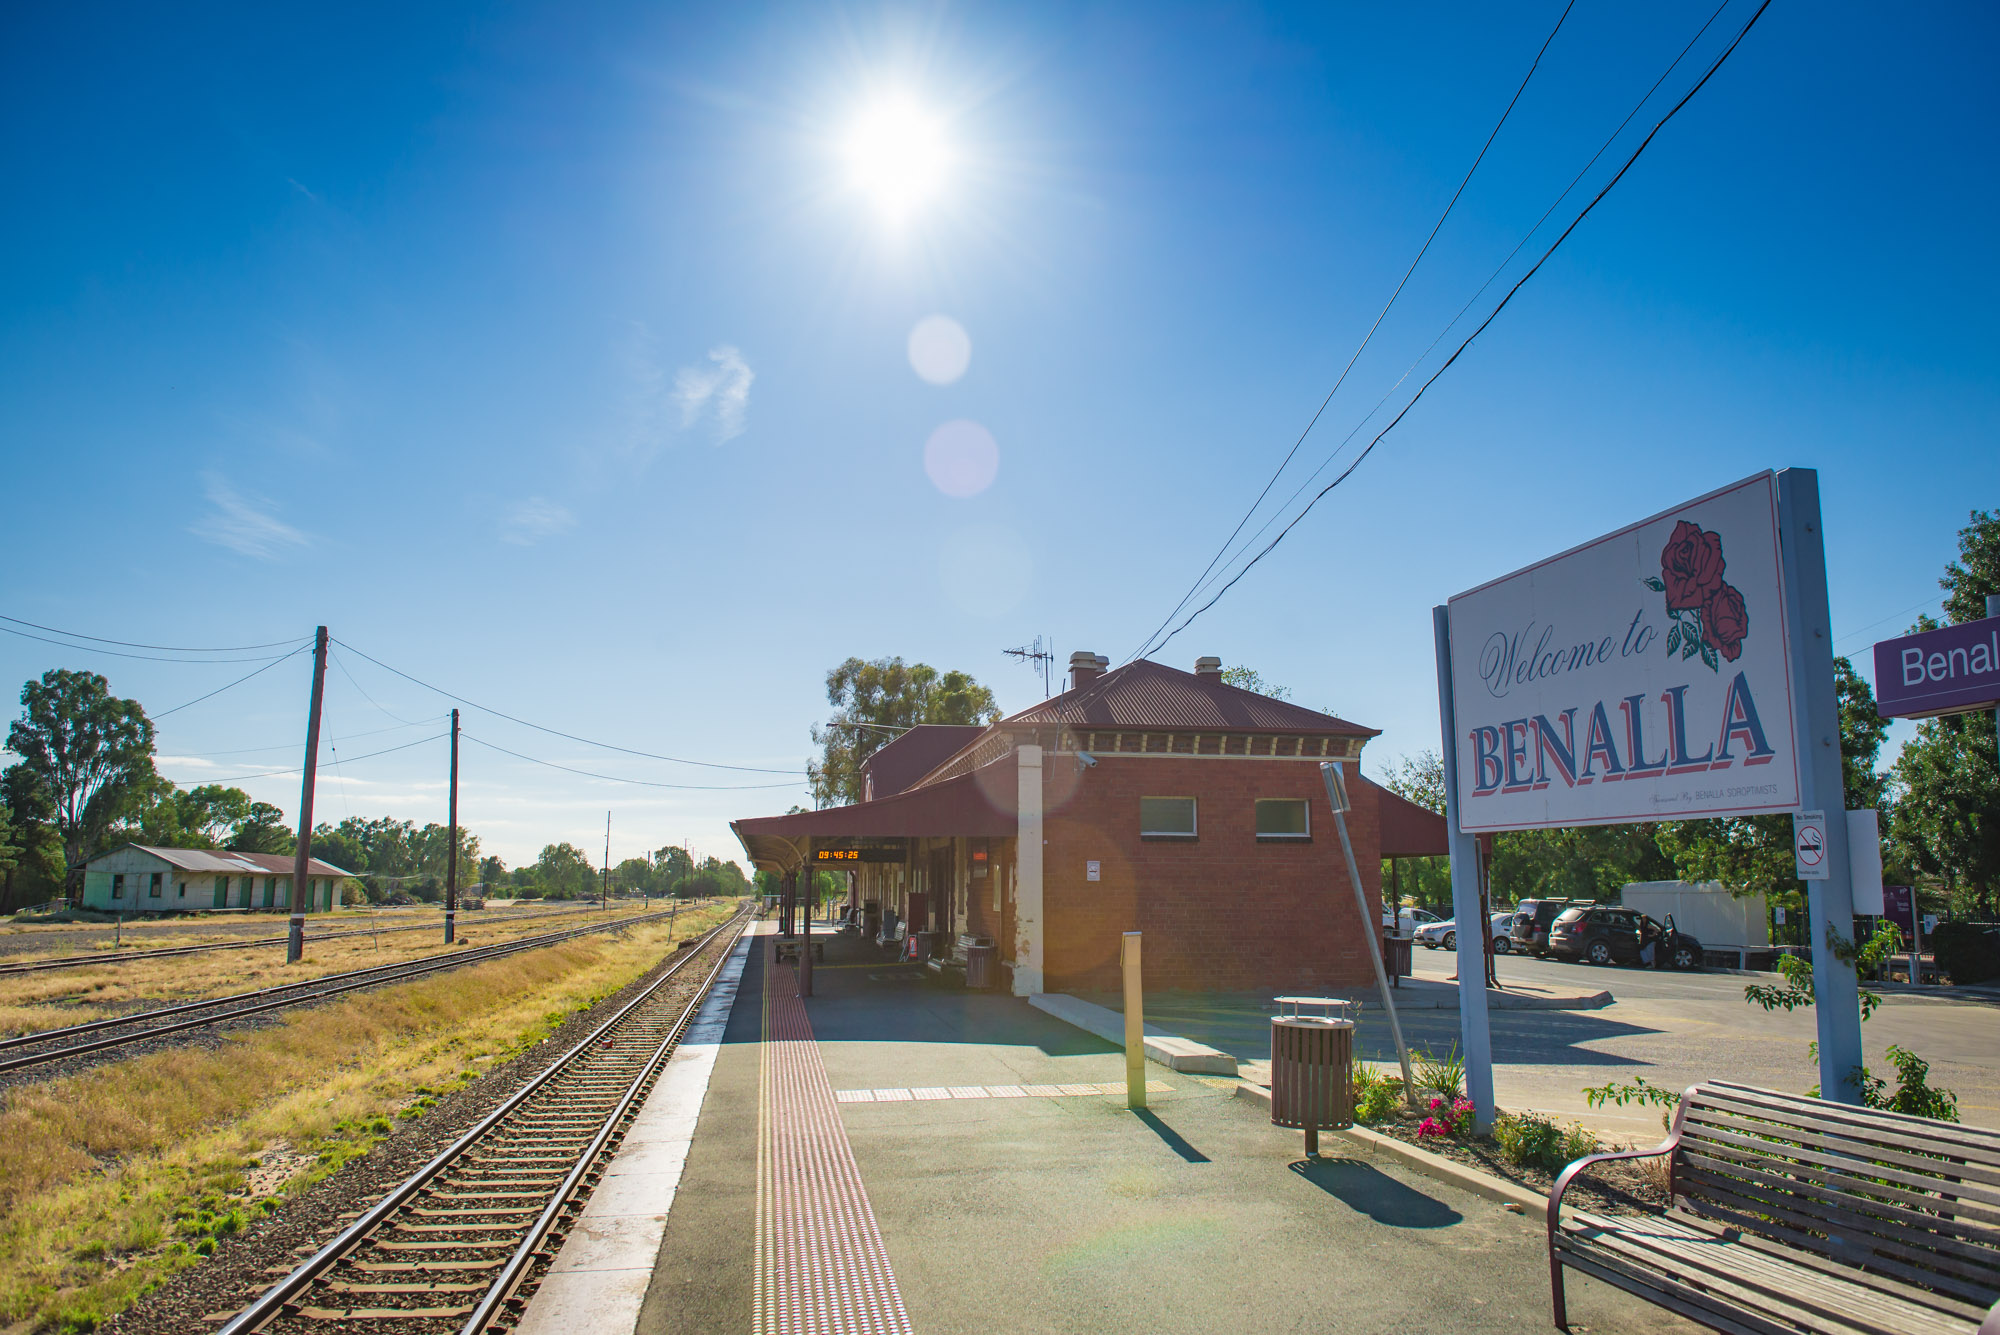 Benalla train station